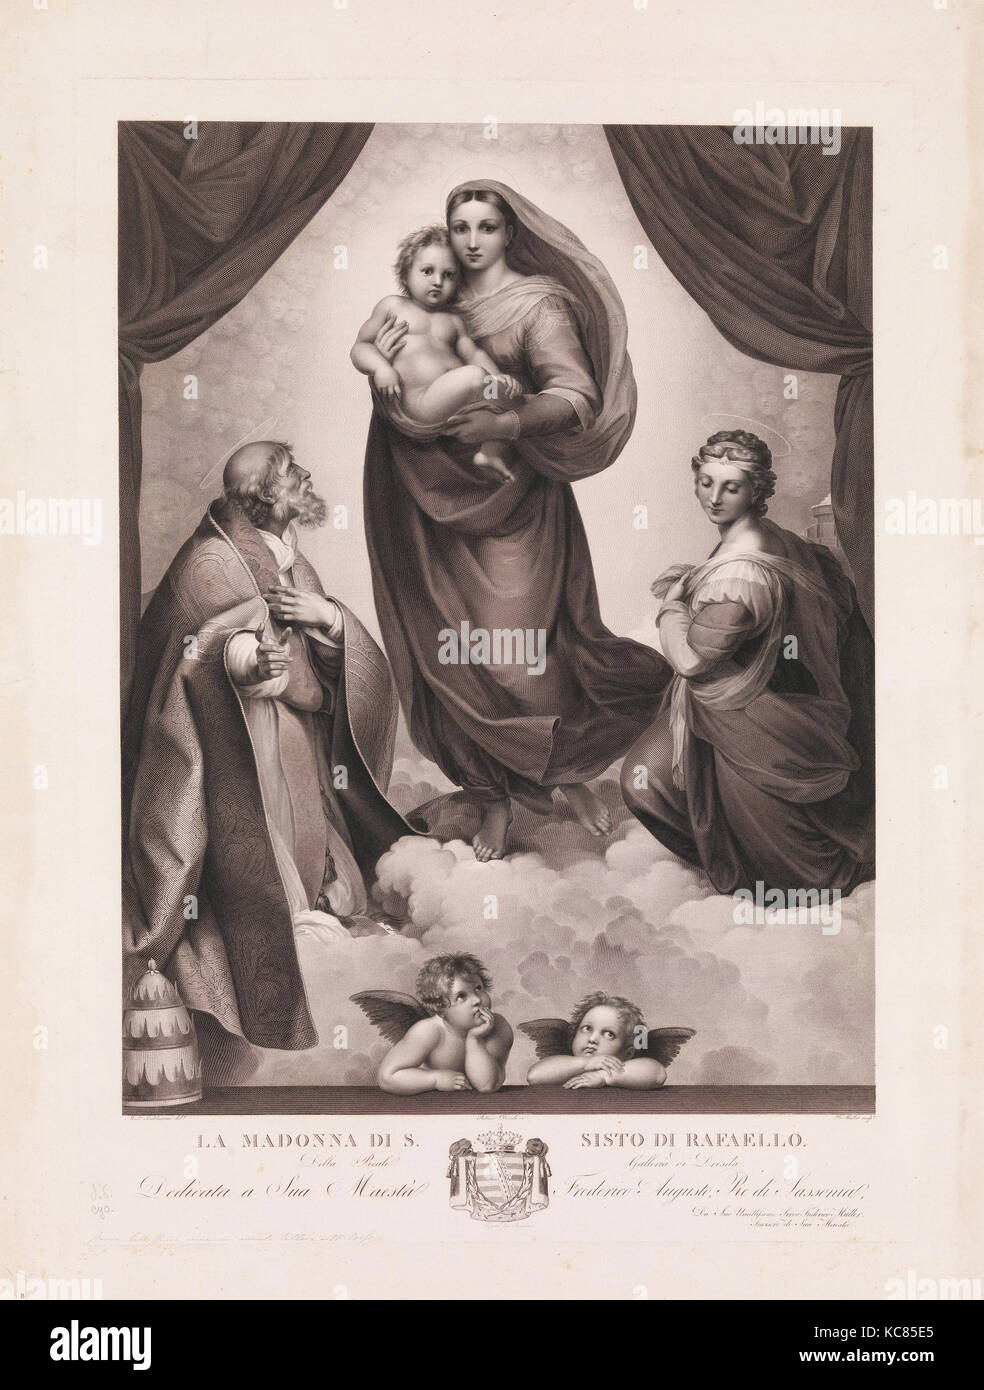 The Sistine Madonna, Johann Friedrich Wilhelm Müller, n.d Stock Photo